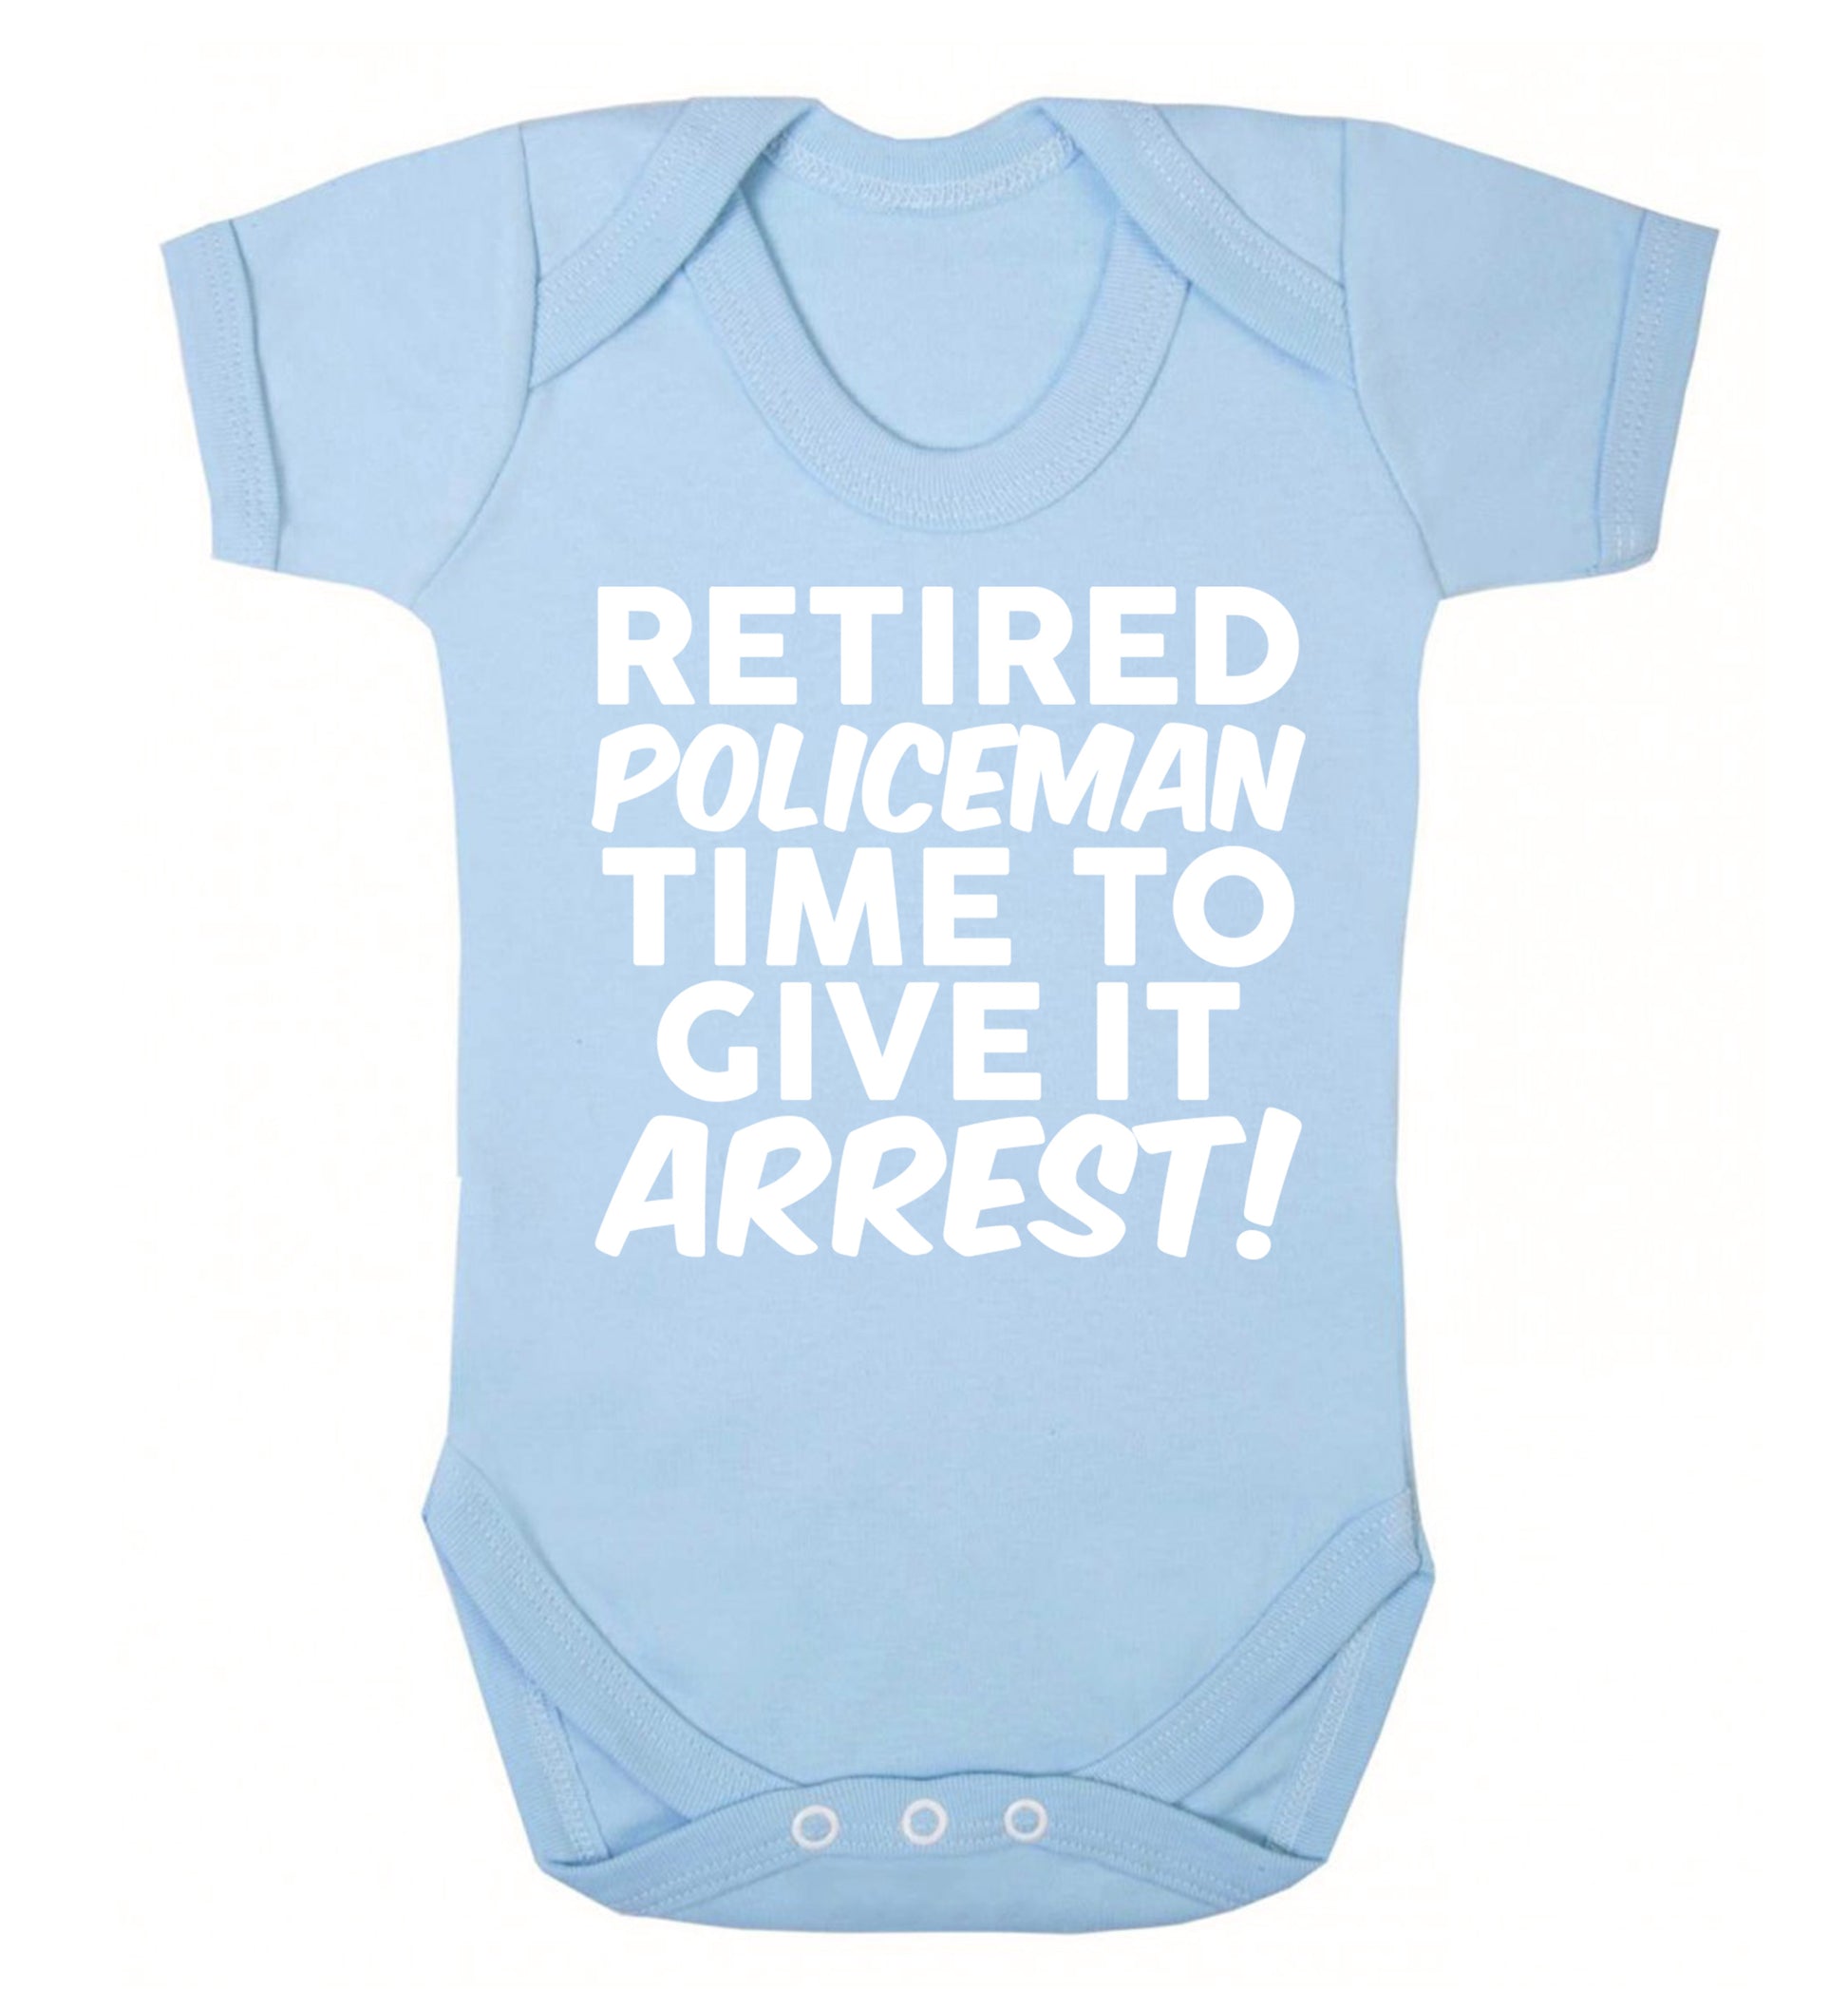 Retired policeman give it arresst! Baby Vest pale blue 18-24 months